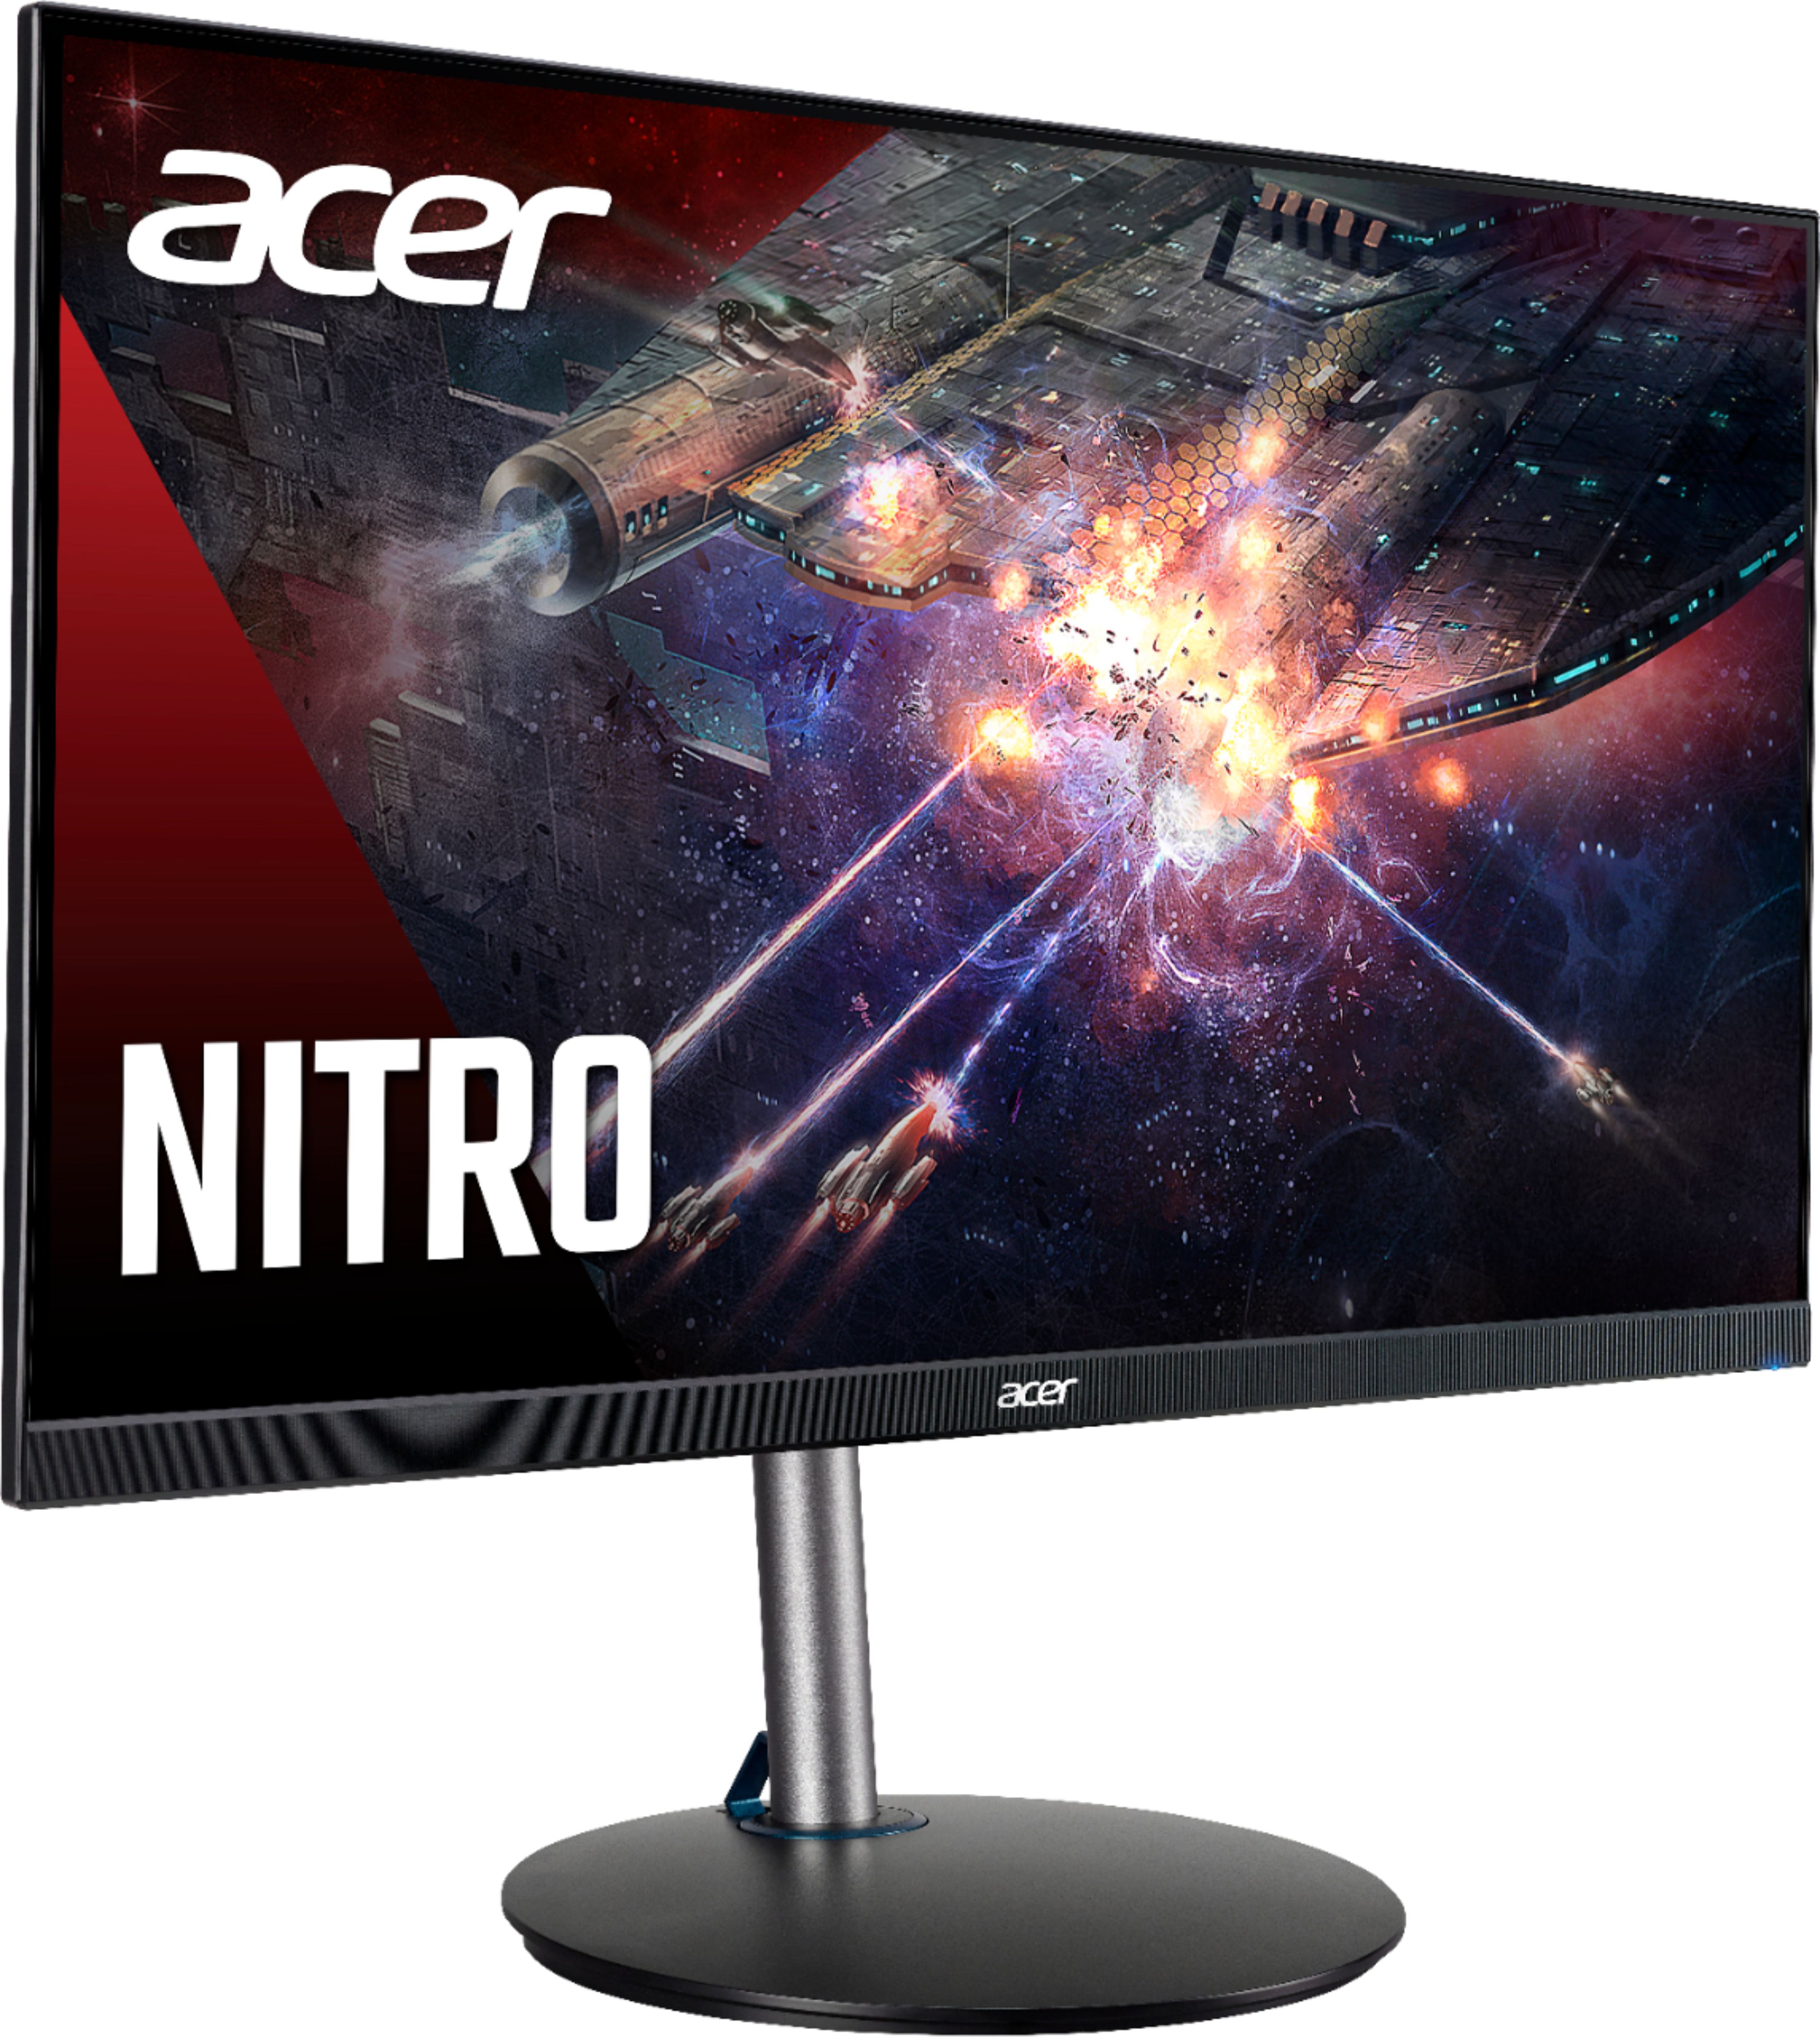 Angle View: Acer - Nitro 23.8" IPS LED FHD FreeSync Gaming Monitor (HDMI 2.0, Display Port)